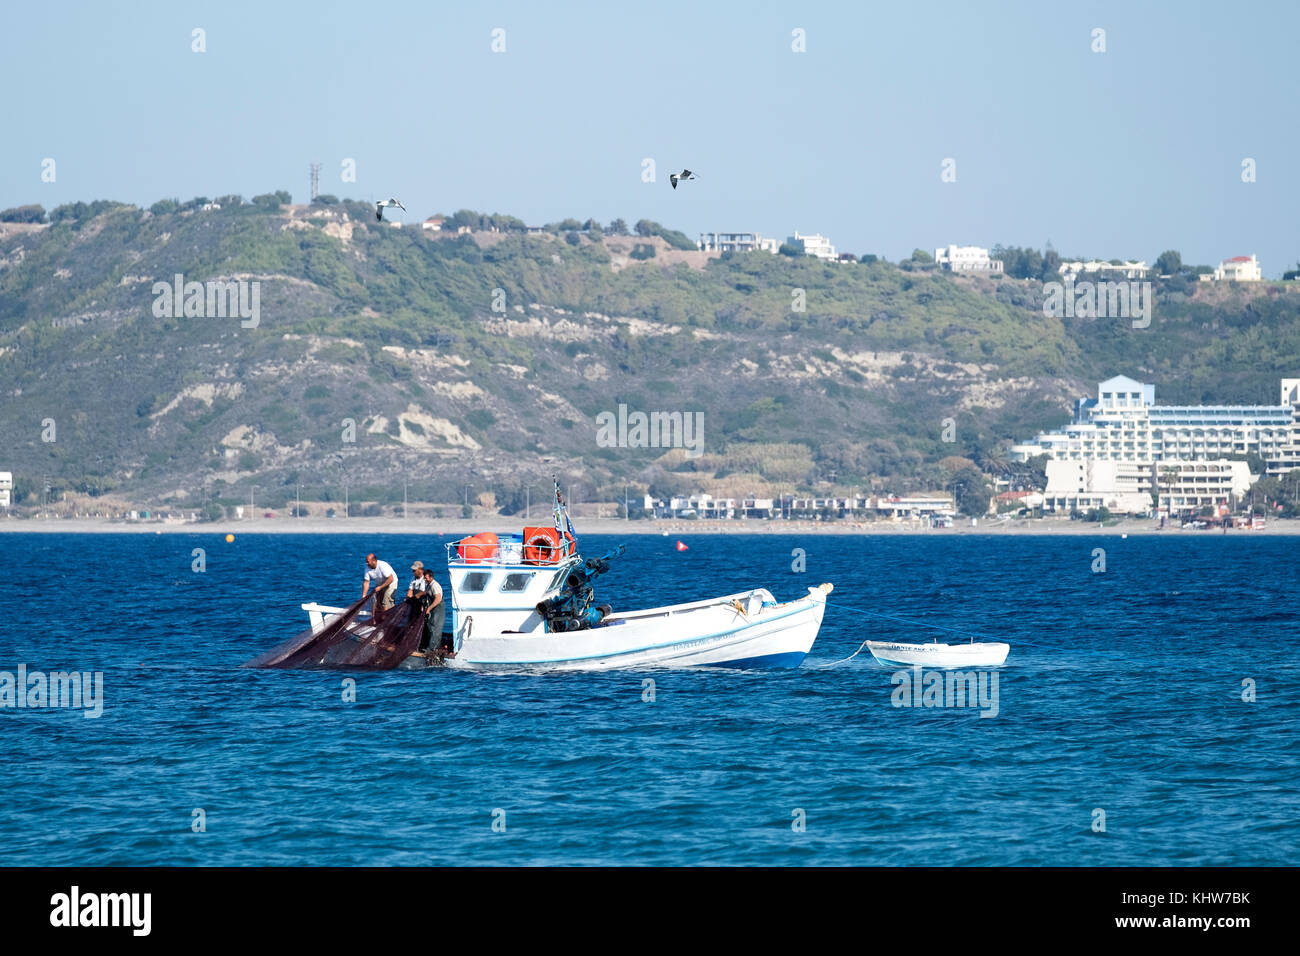 Fishing Scoop Net on Boat in Blue Sea Stock Photo - Image of empty